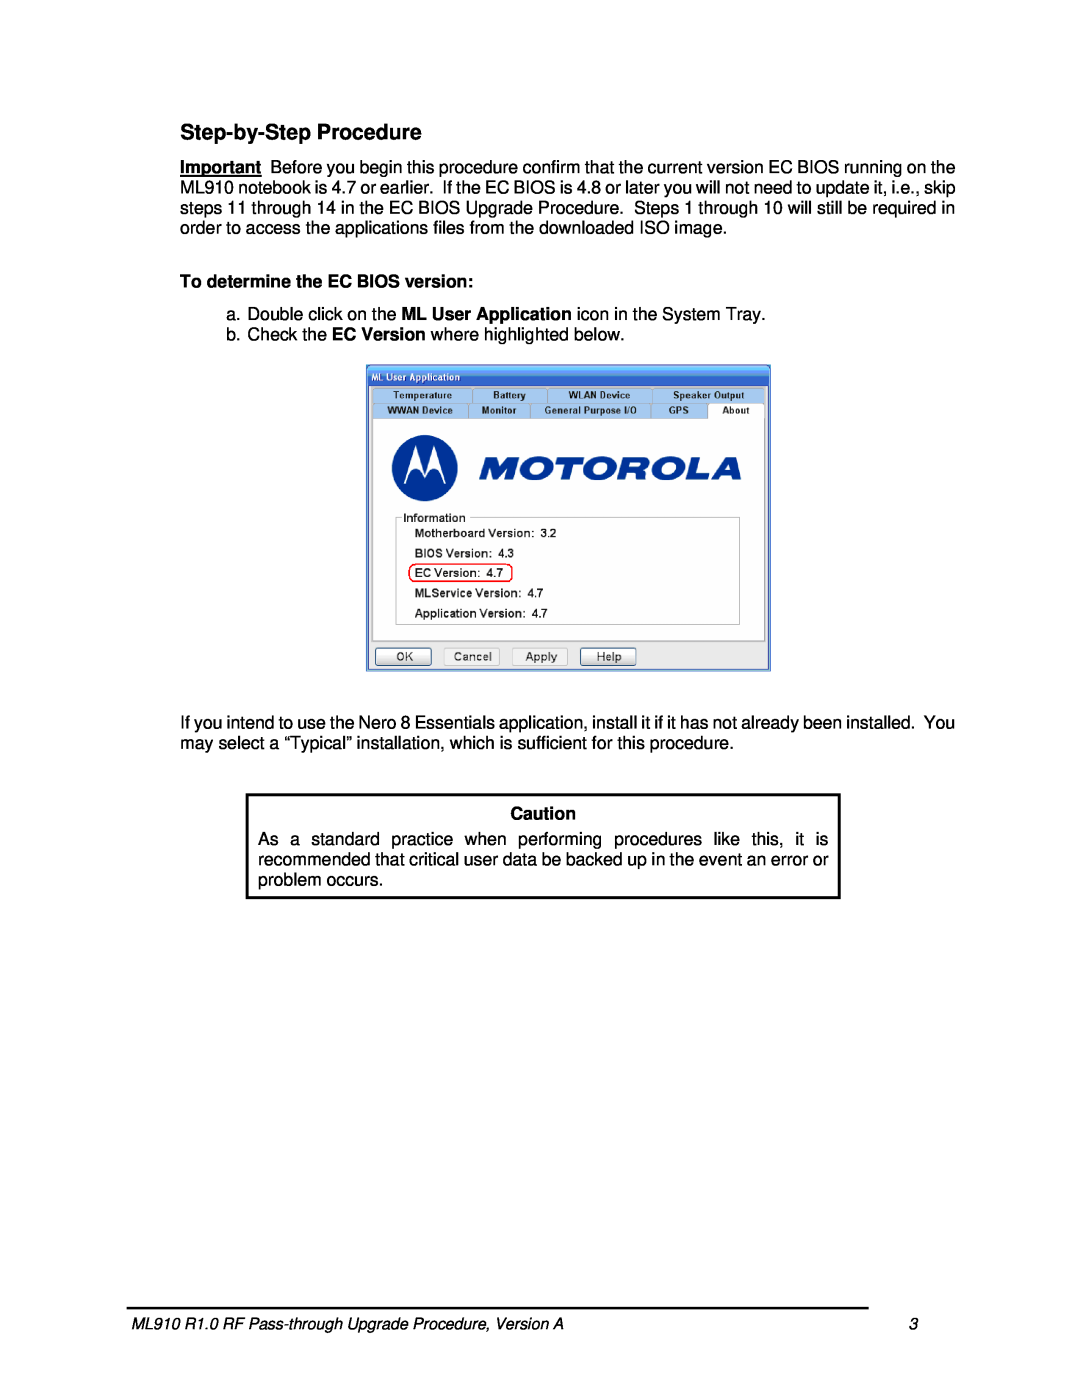 Motorola ML910TM manual Step-by-Step Procedure, ML910 R1.0 RF Pass-through Upgrade Procedure, Version A 